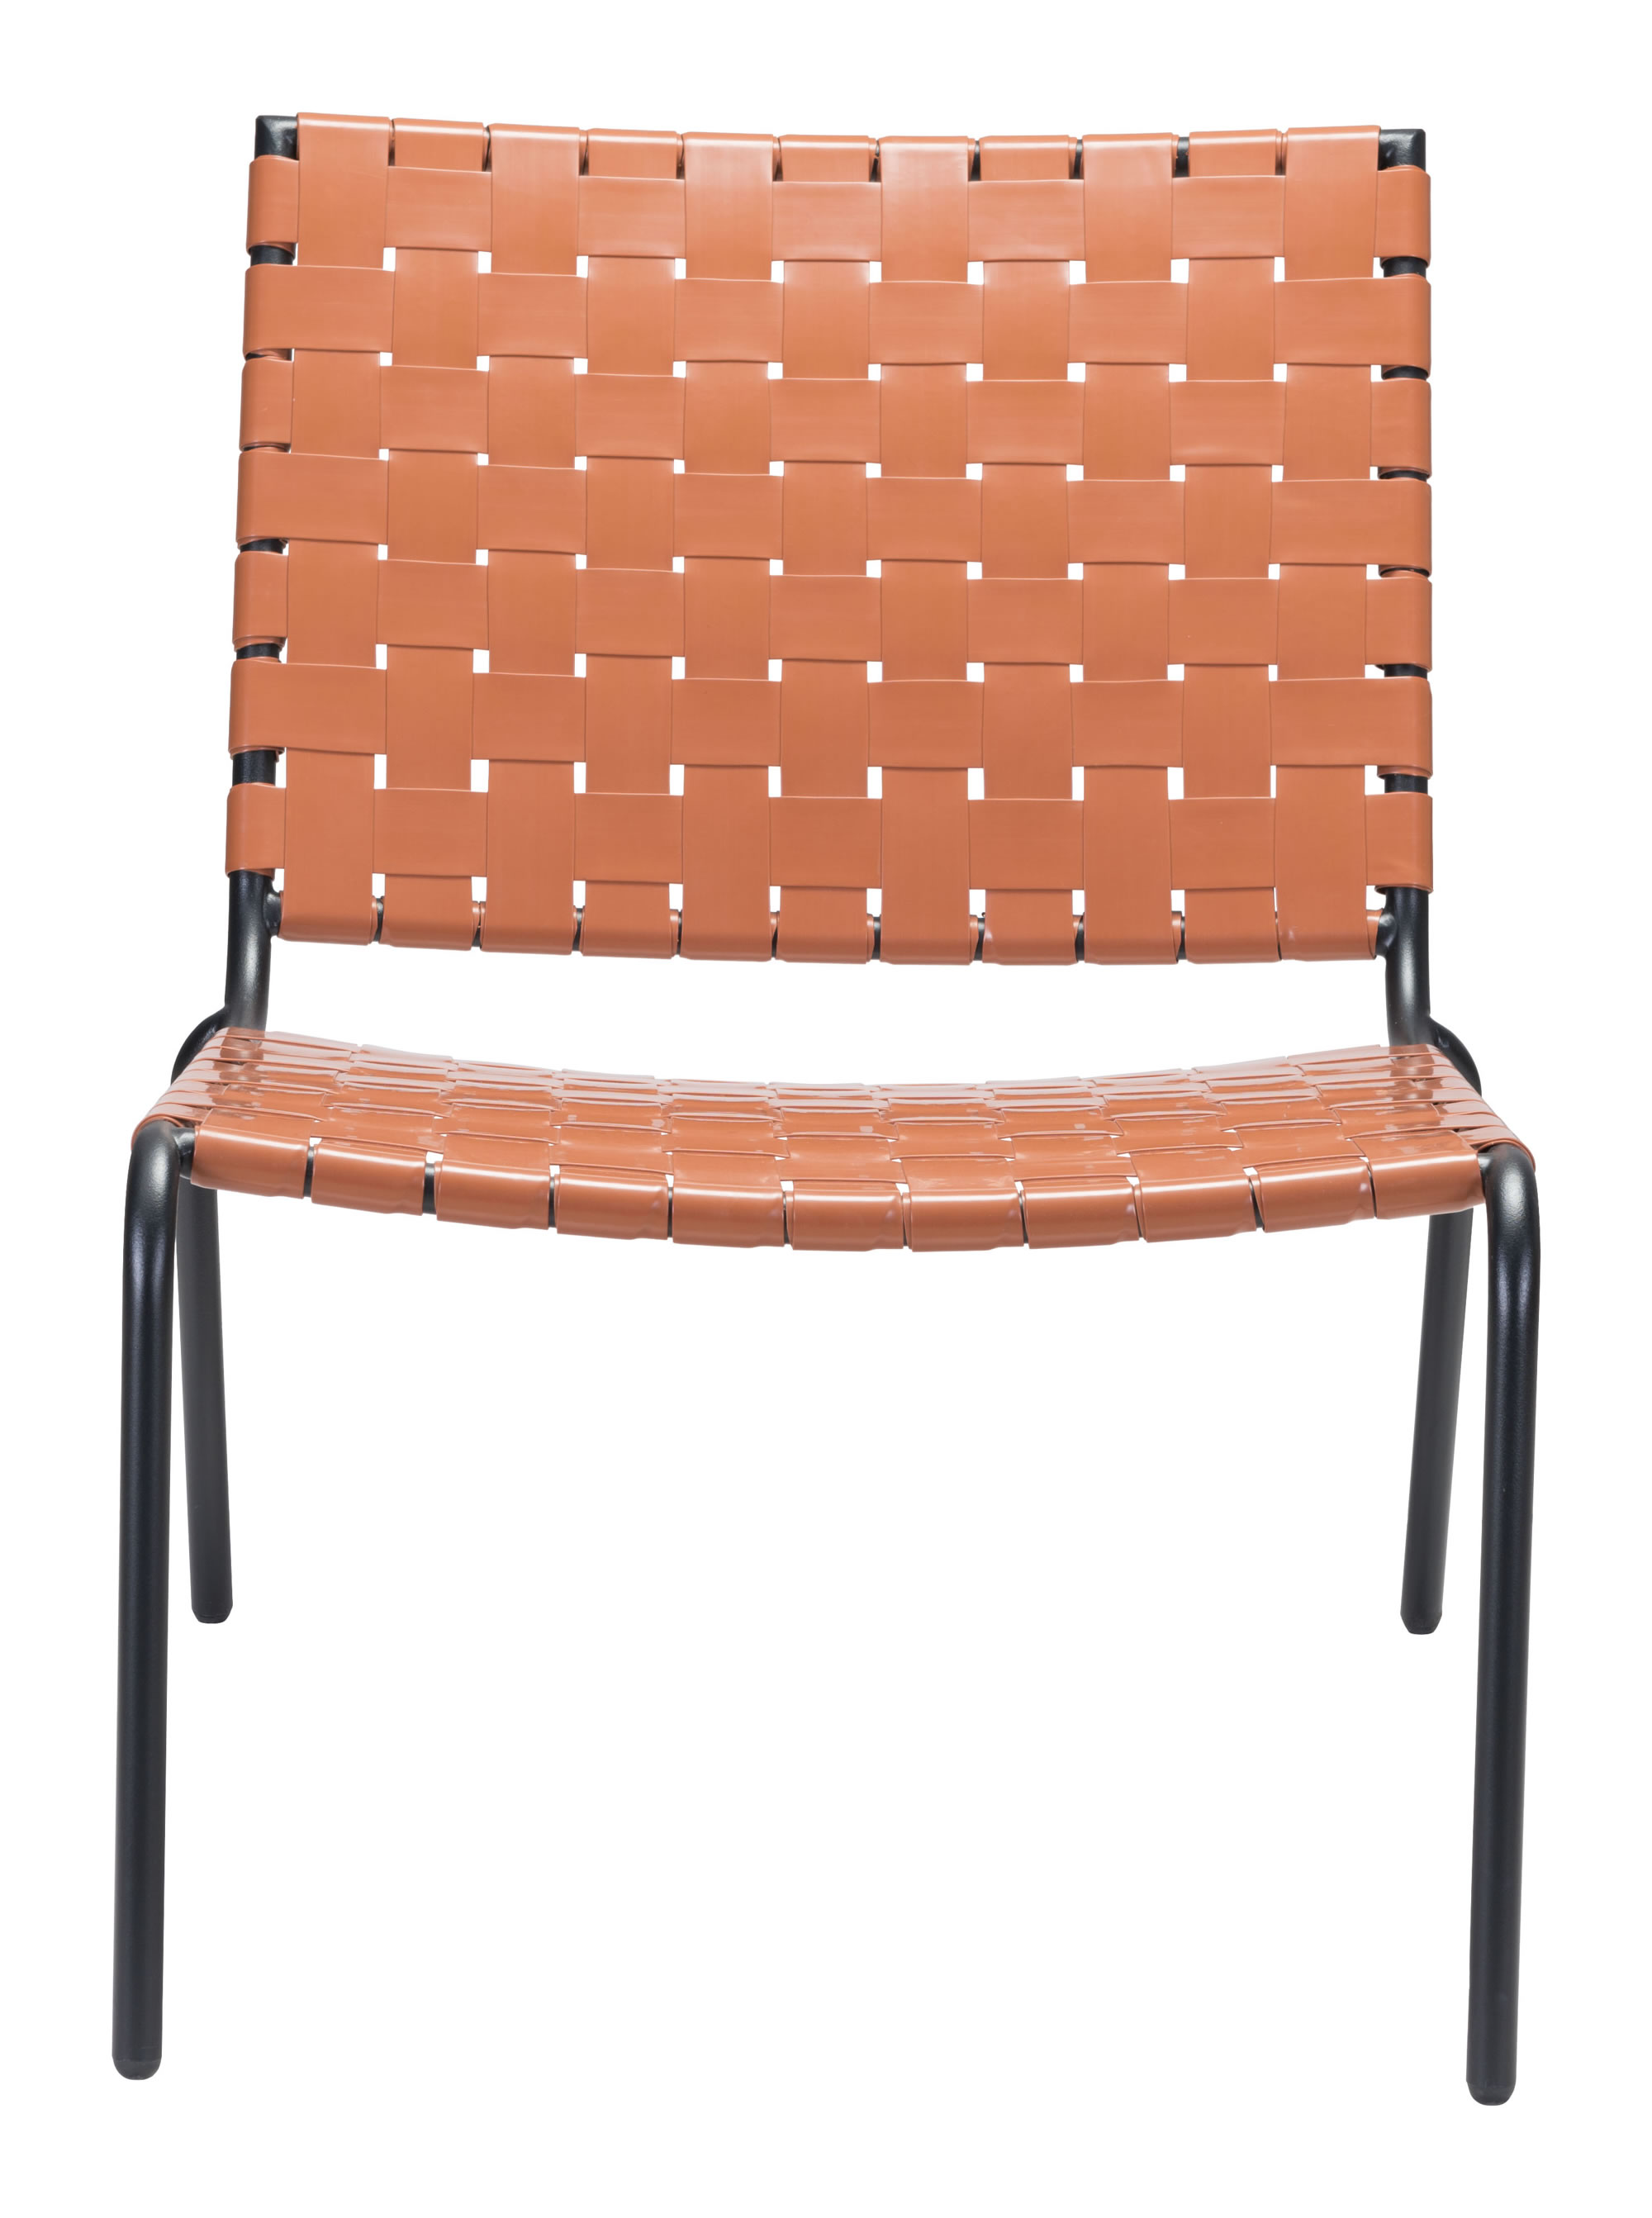 26.4" x 35.8" x 31.5" Tan, PVC, Steel, Lounge Chair